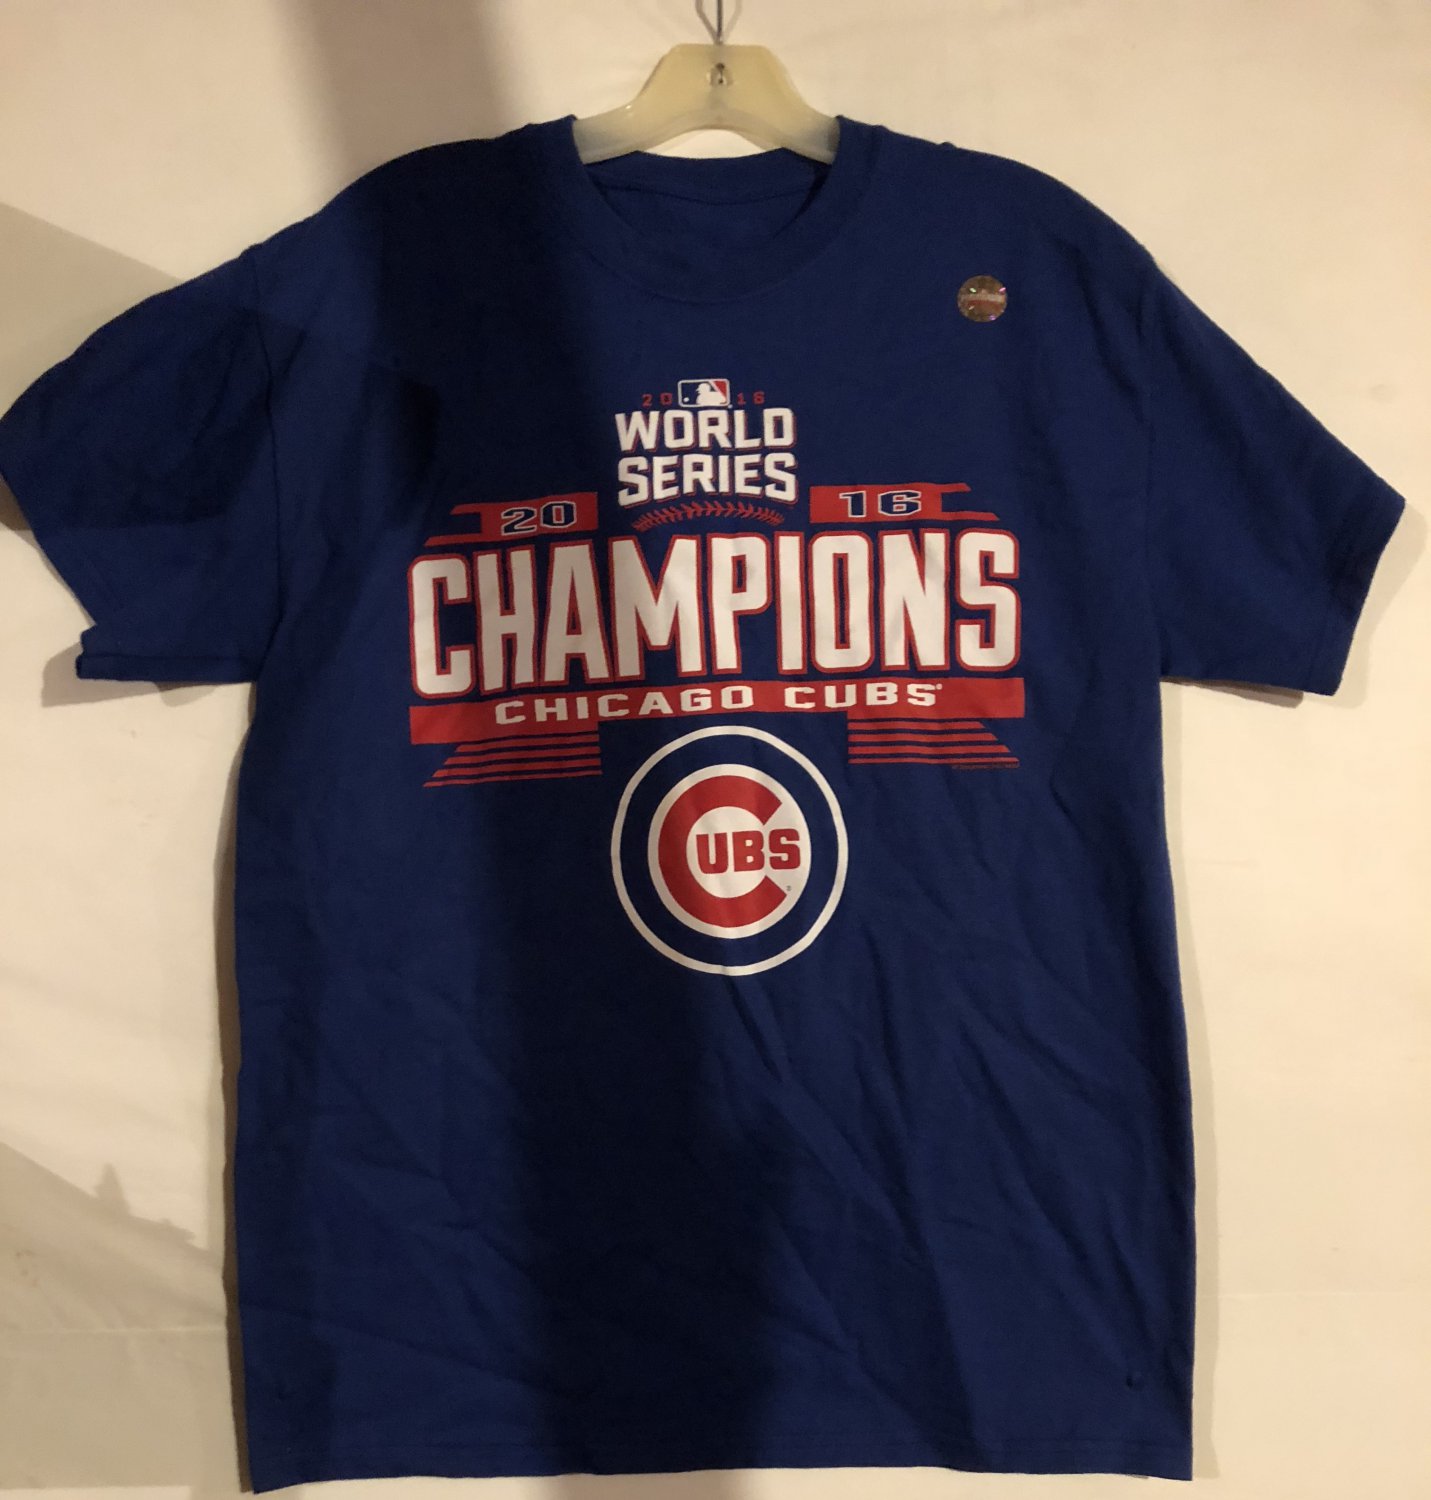 2016 WORLD SERIES CHAMPIONS CHICAGO CUBS T-Shirt Medium *NEW*